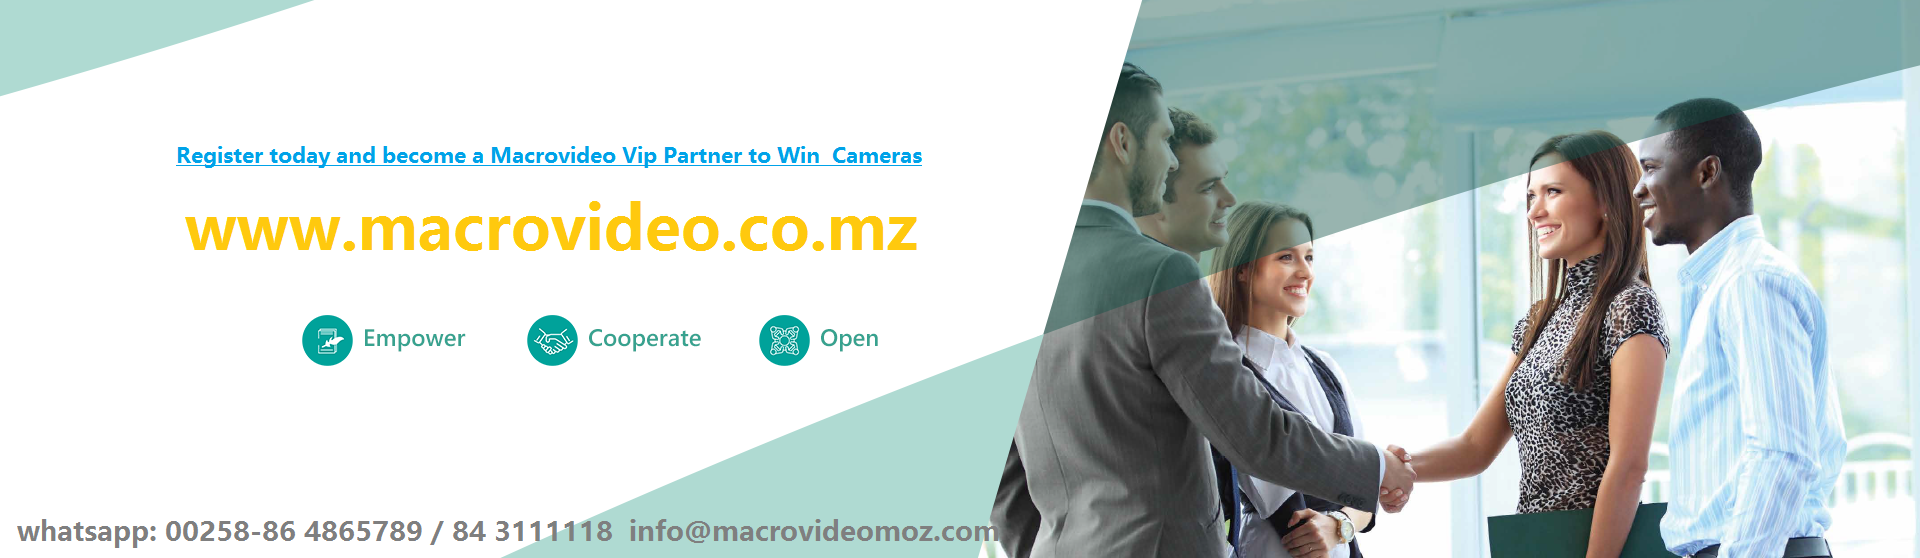 Register online to win camera